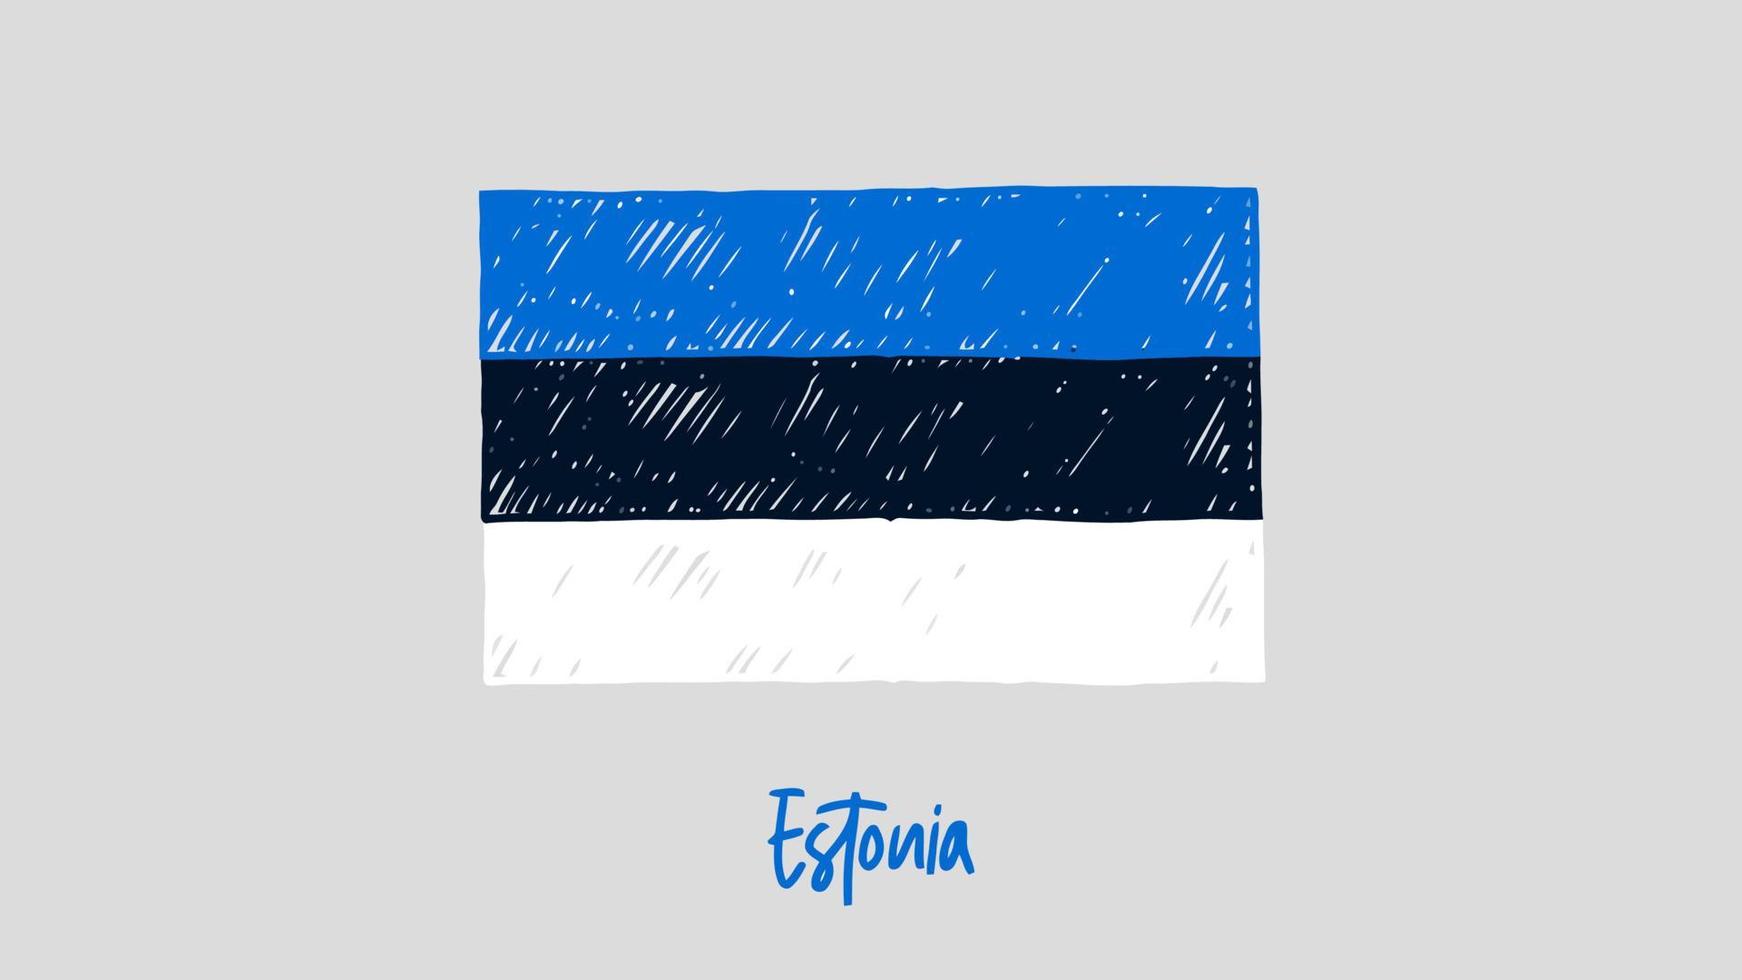 Estonia National Country Flag Marker or Pencil Sketch Illustration Vector